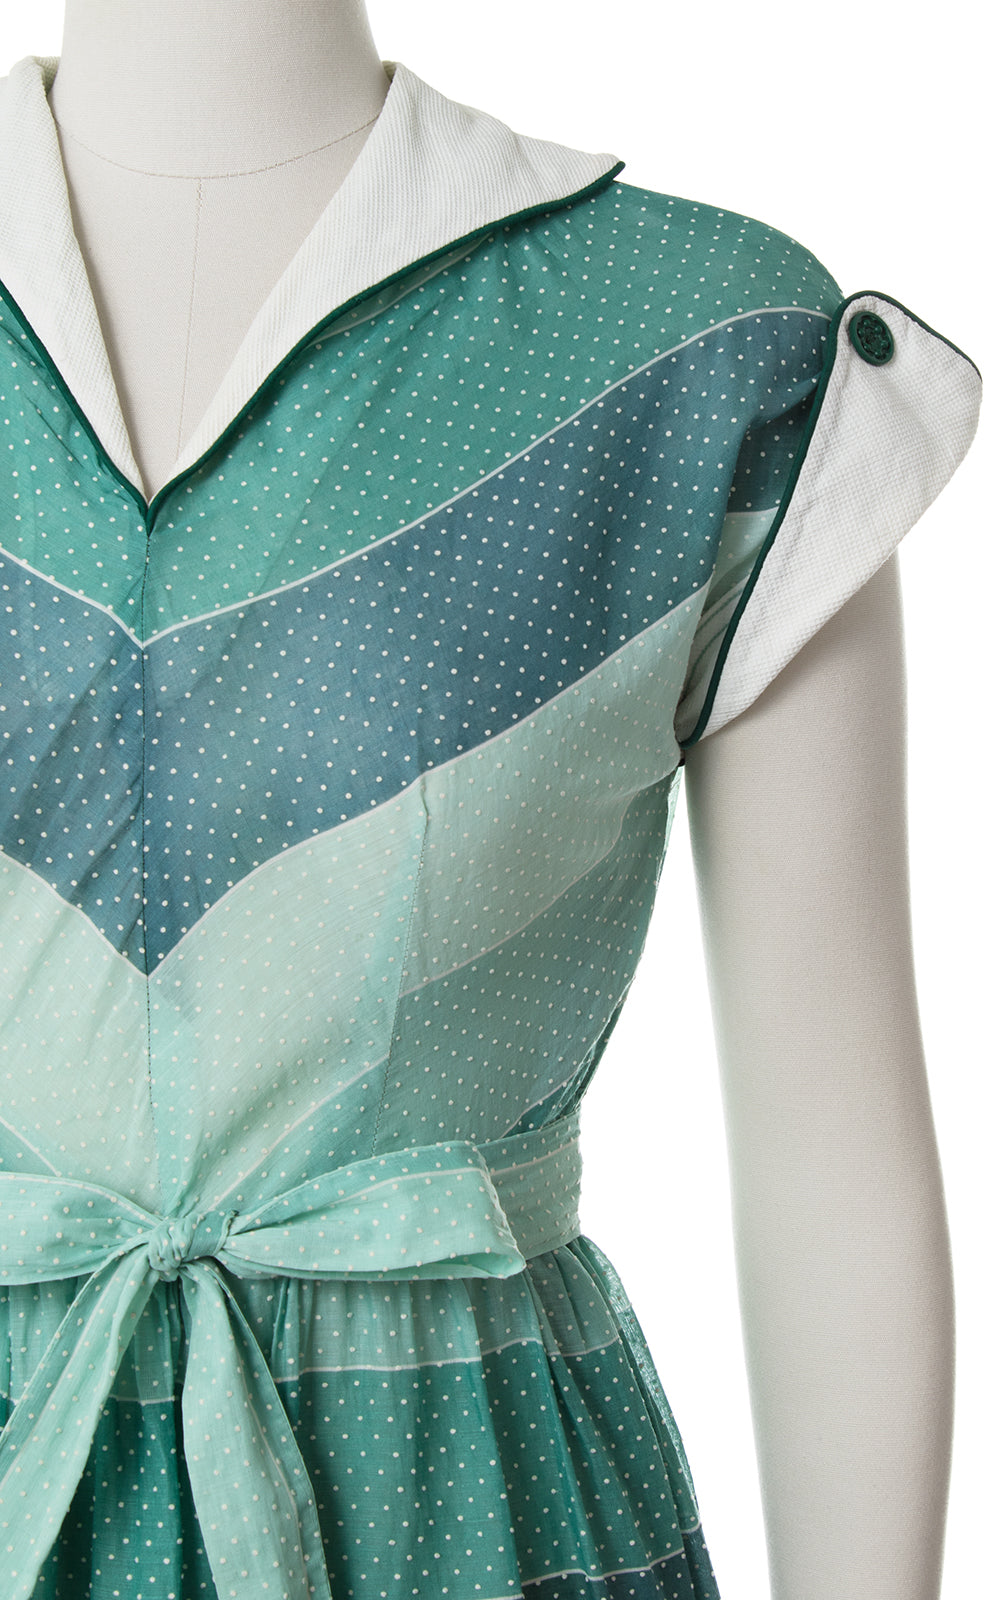 1950s Polka Dot Striped Sheer Dress